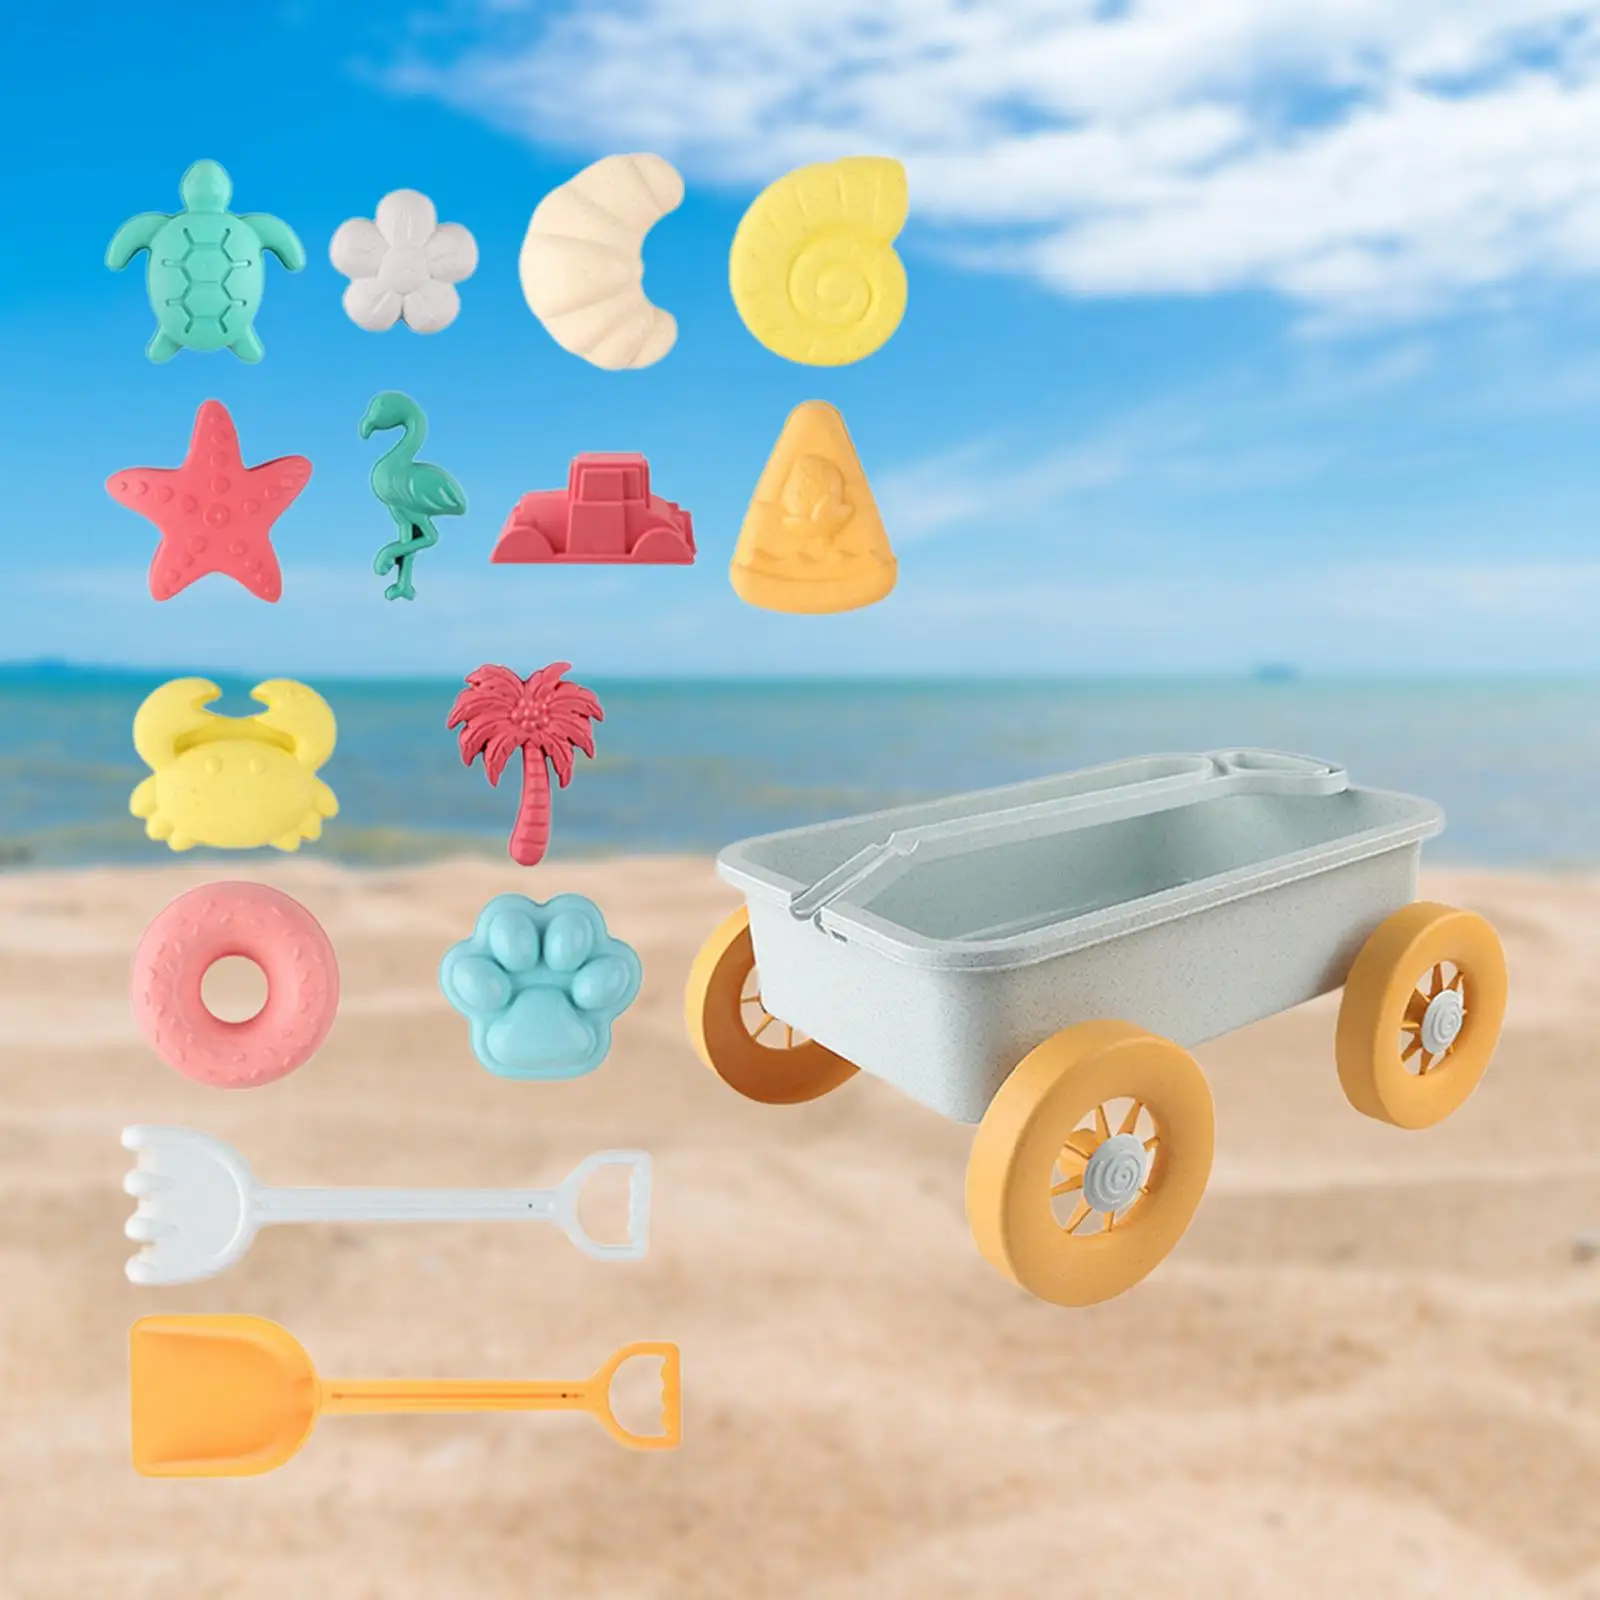 15Pcs Beach Toys Sand Set,Sand Toys Set,Includes Sand Models,Travel Beach Cart Crab Donut Travel Toys Sand Toys for Kids